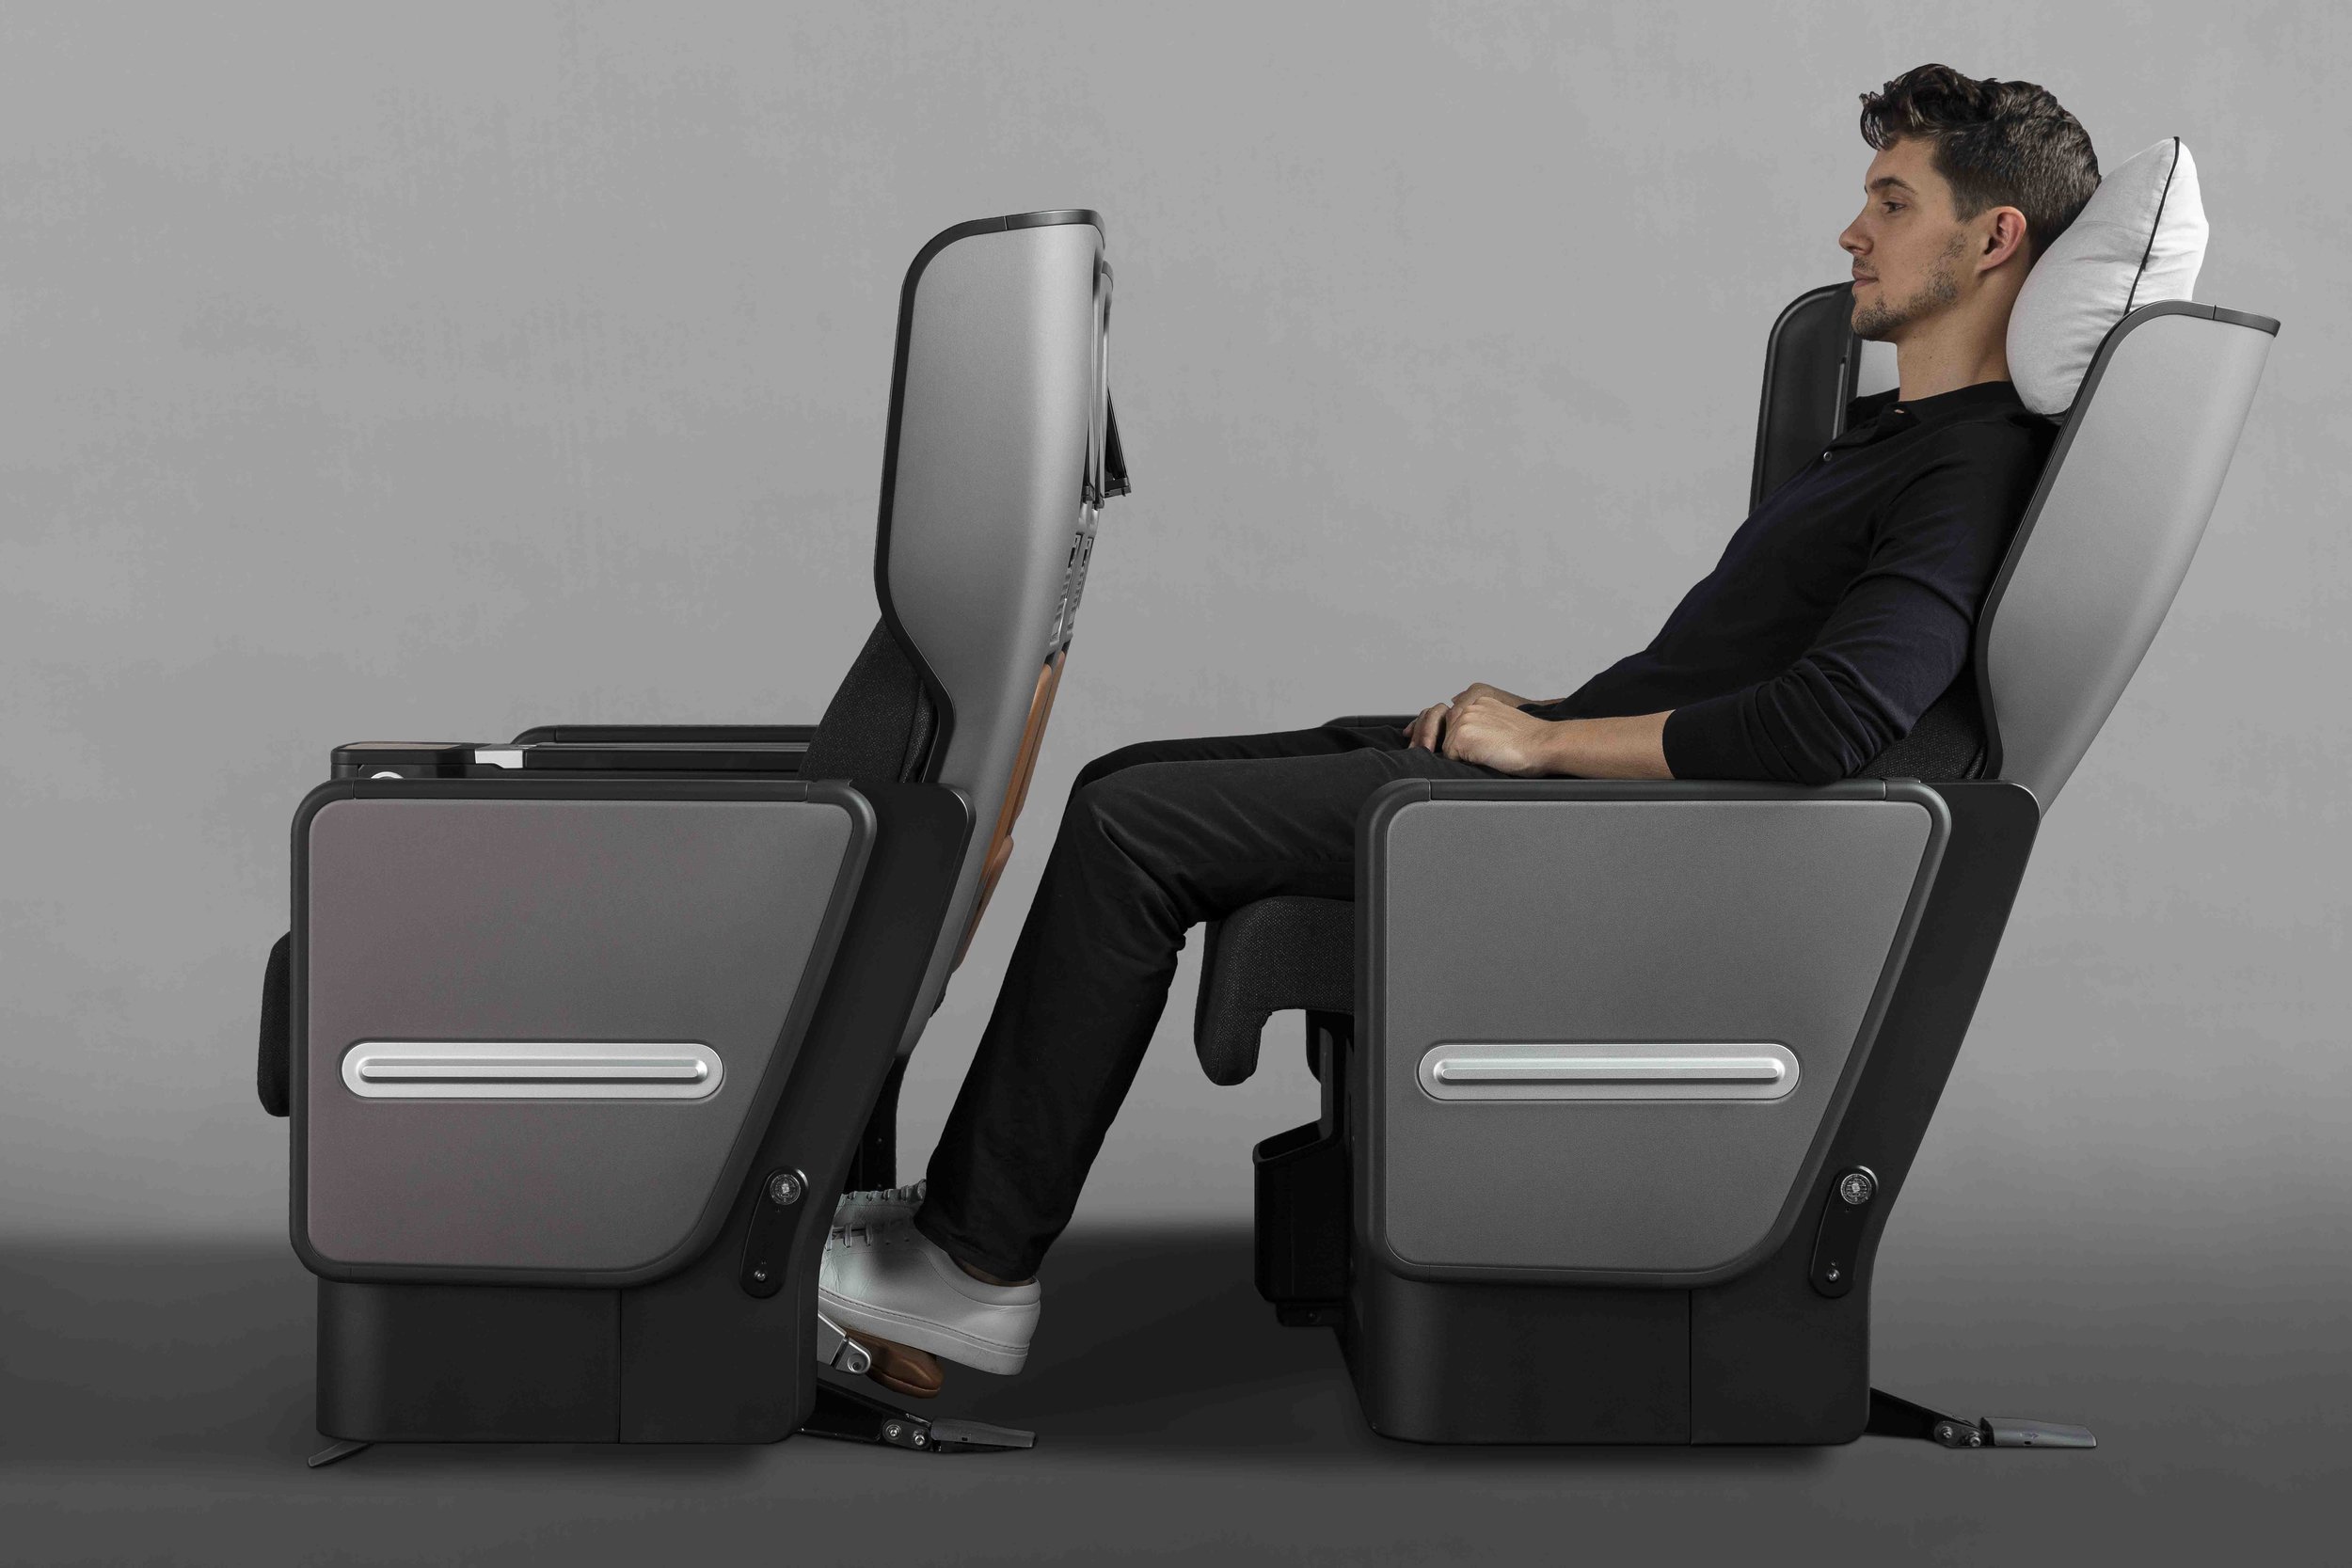   Qantas 787 Dreamliner Premium Economy Seats by Caon Studio  